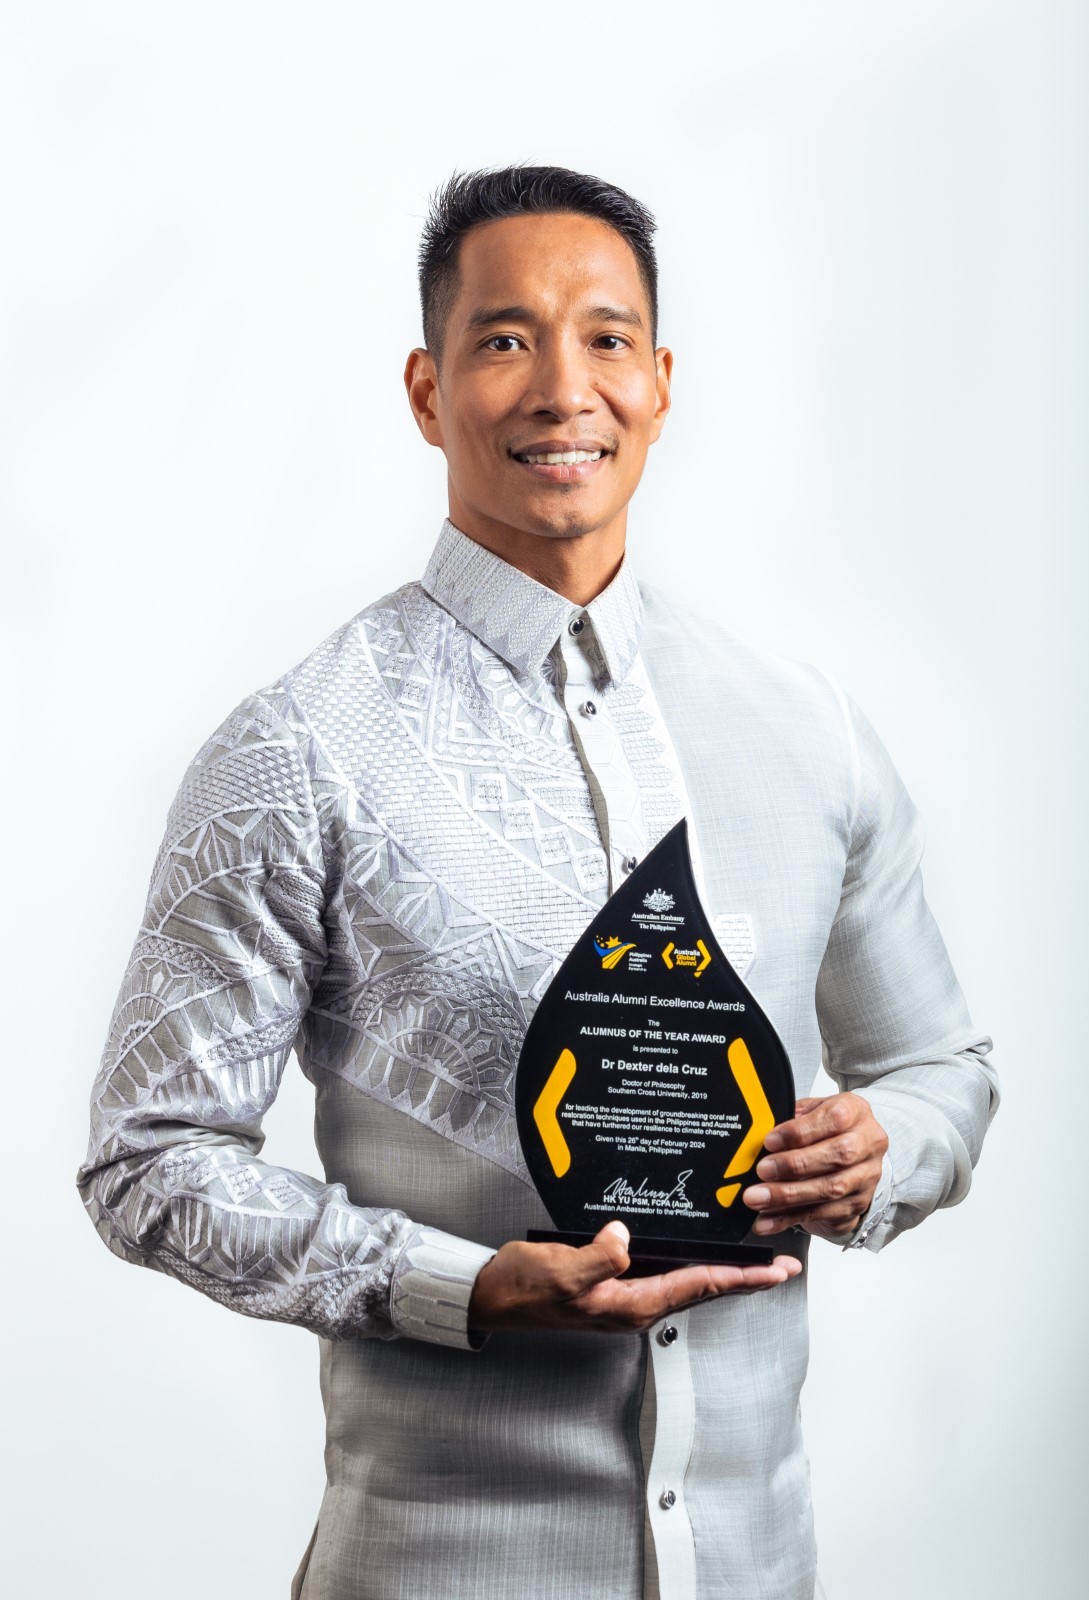 Man smiling holding an award